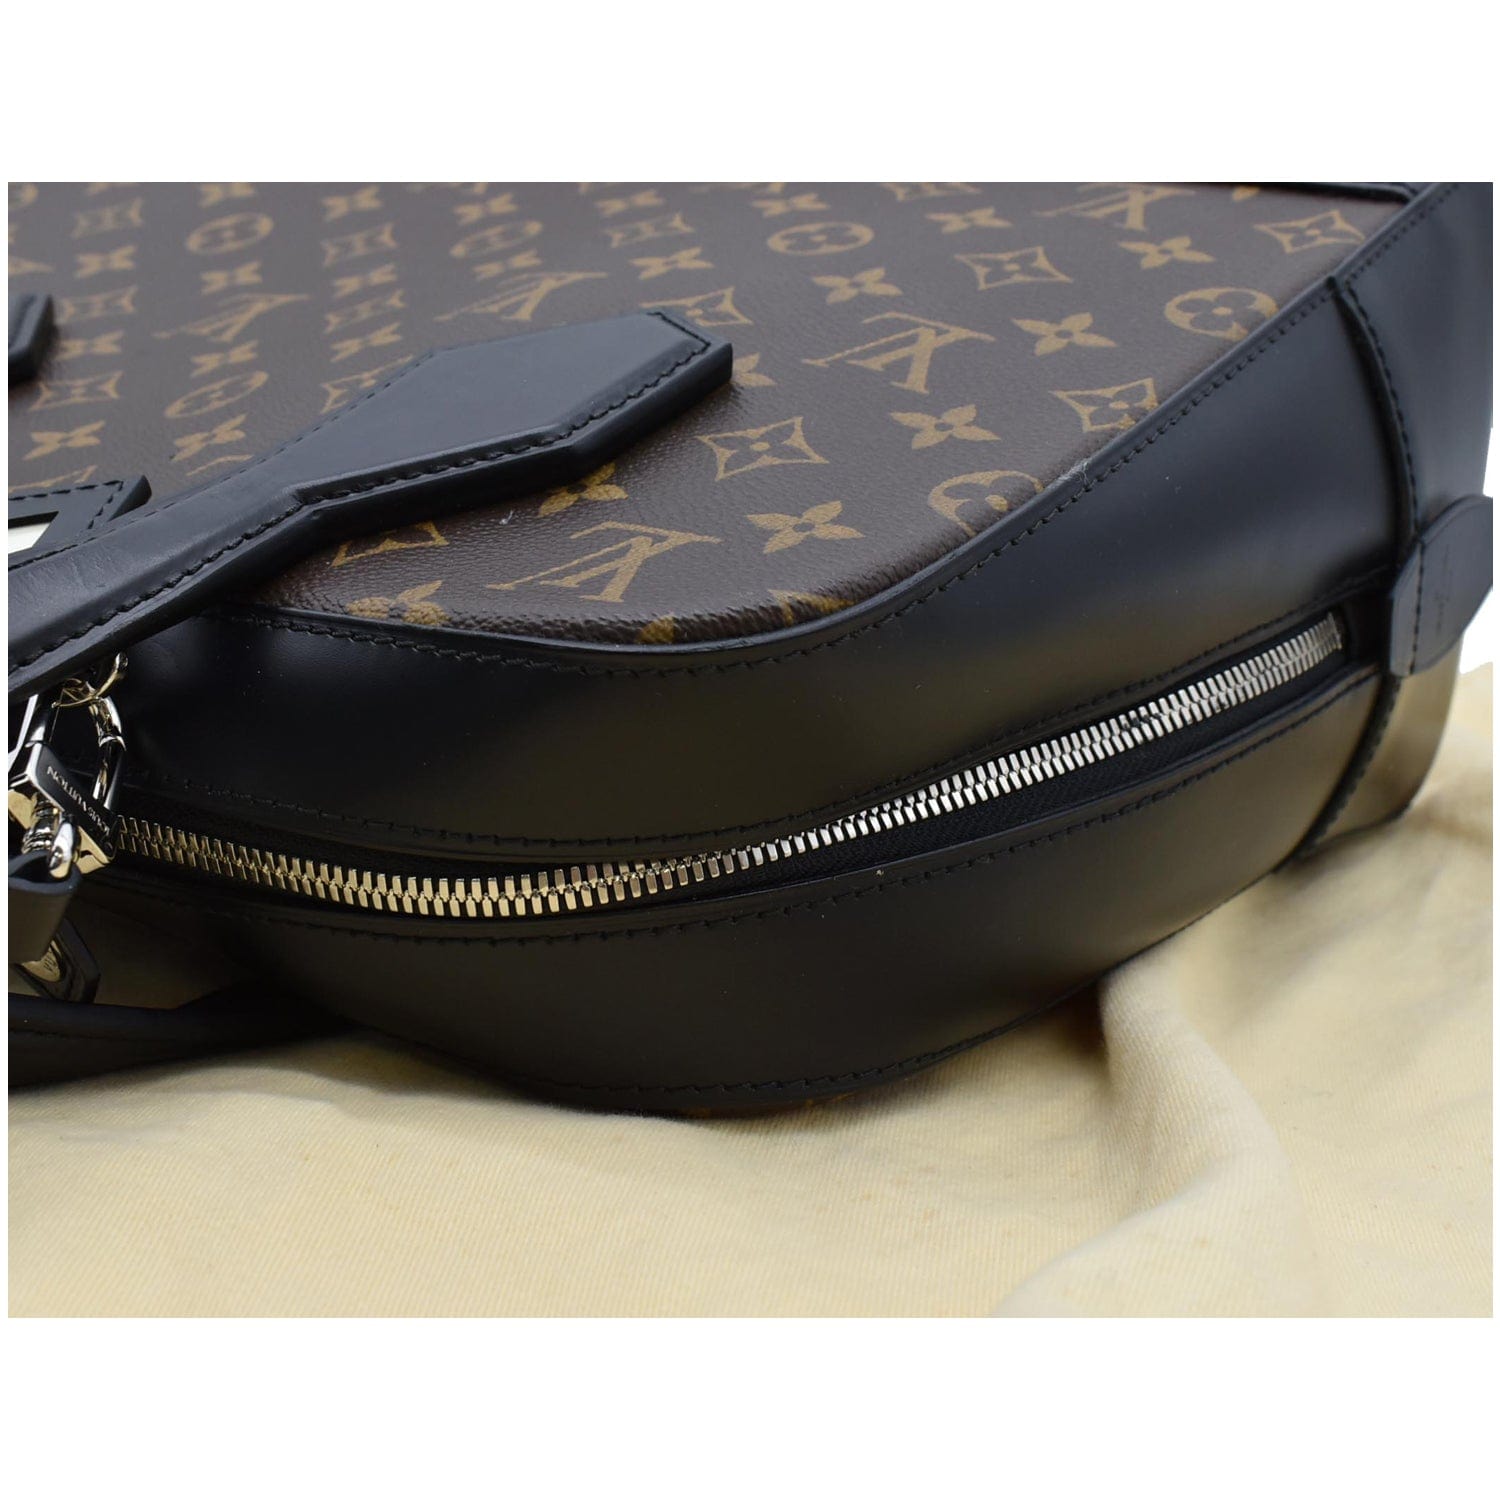 Louis Vuitton Dora Leather Handbag